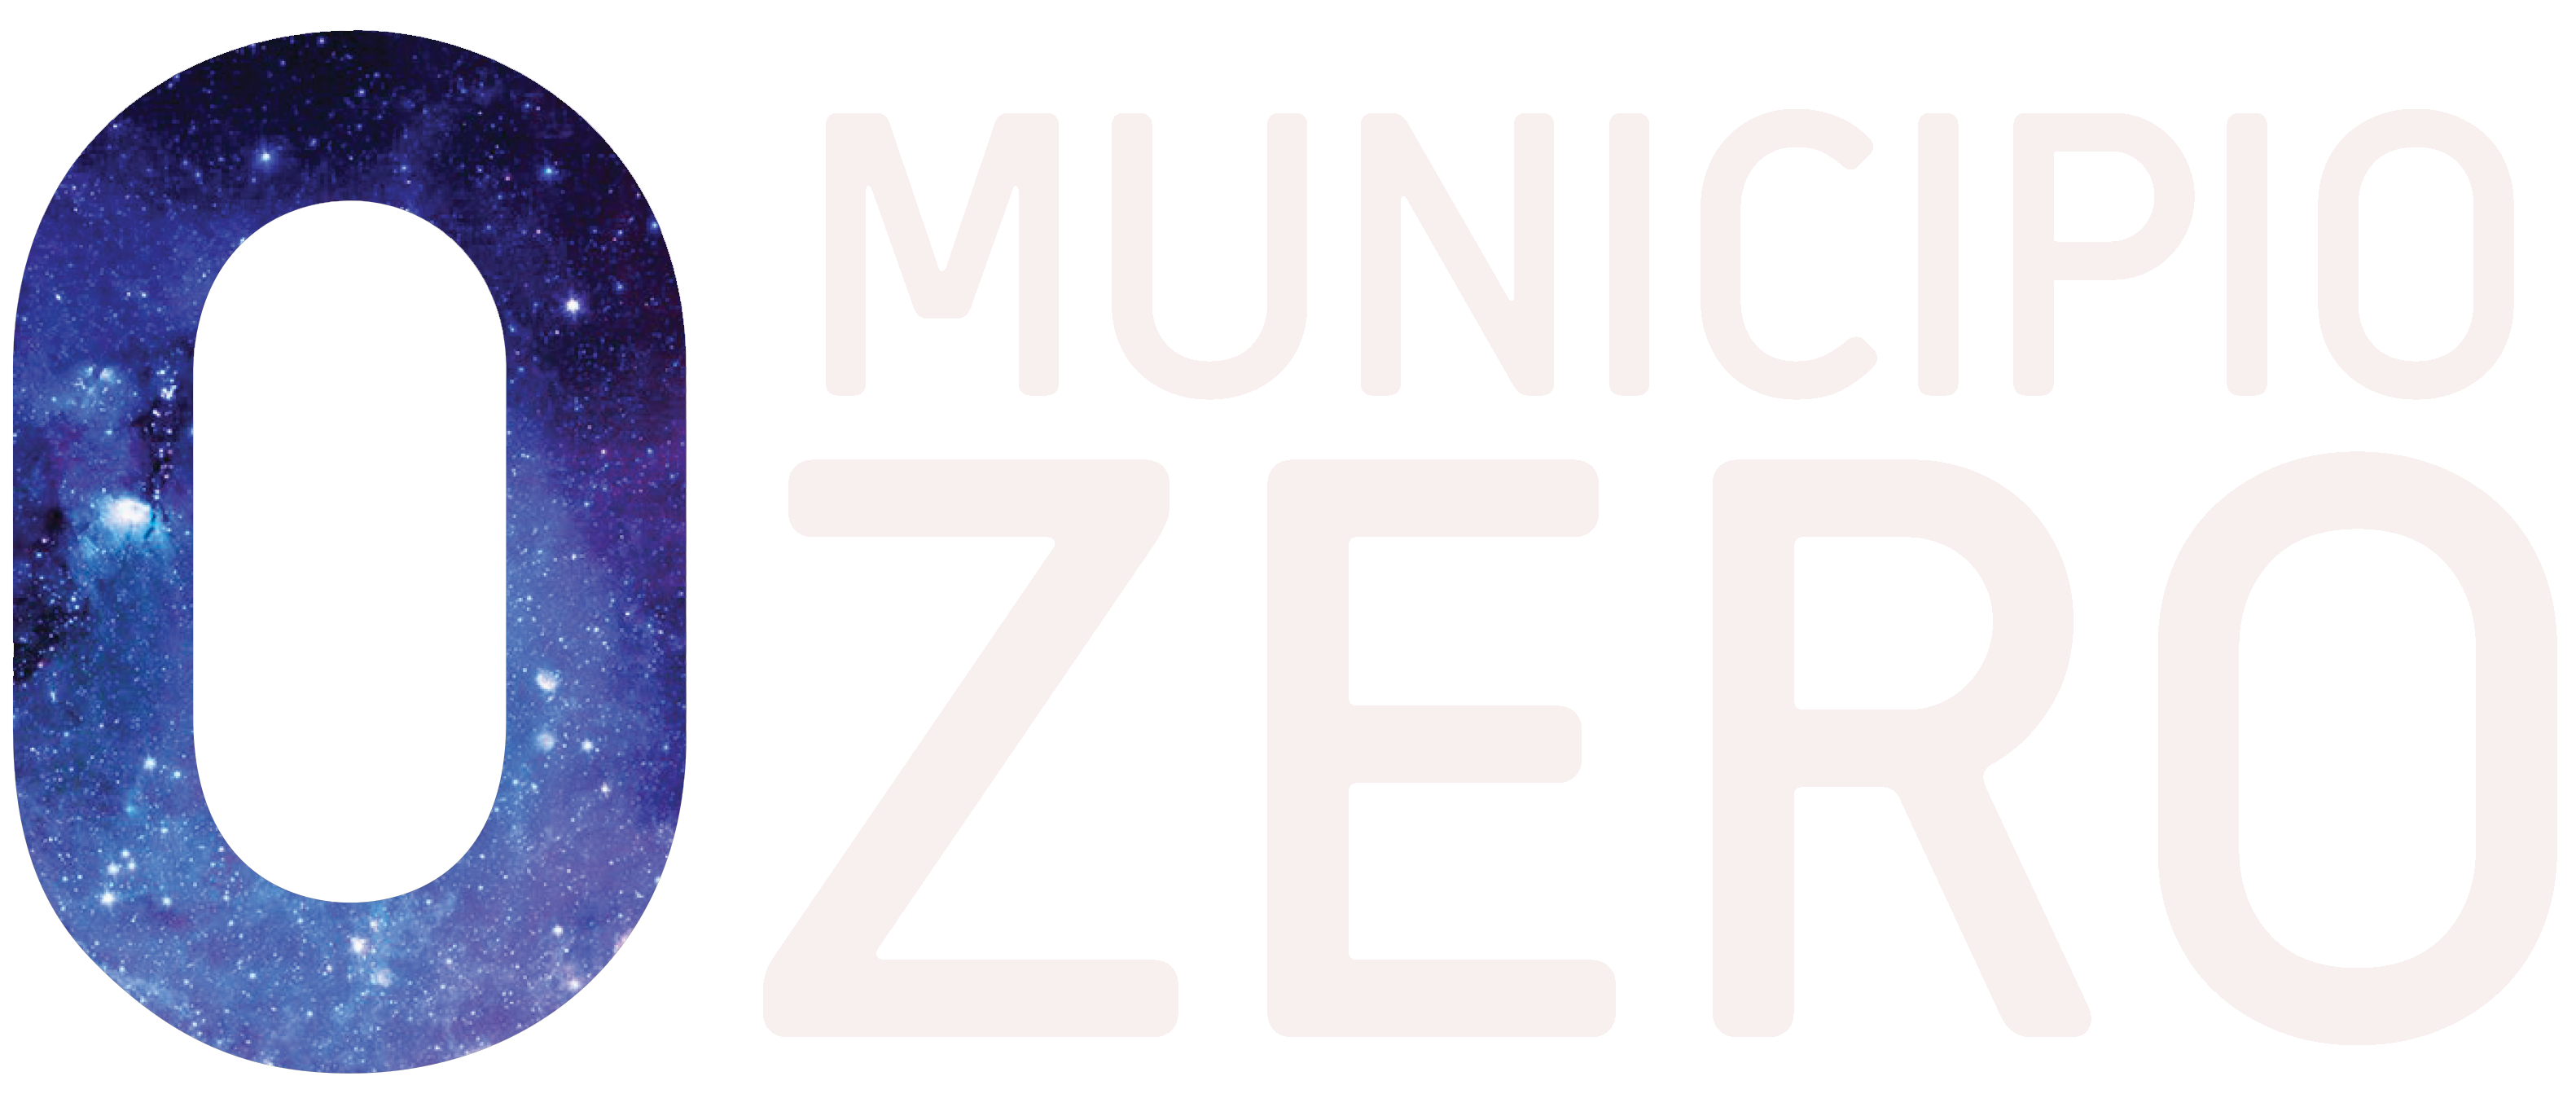 Municipio zero